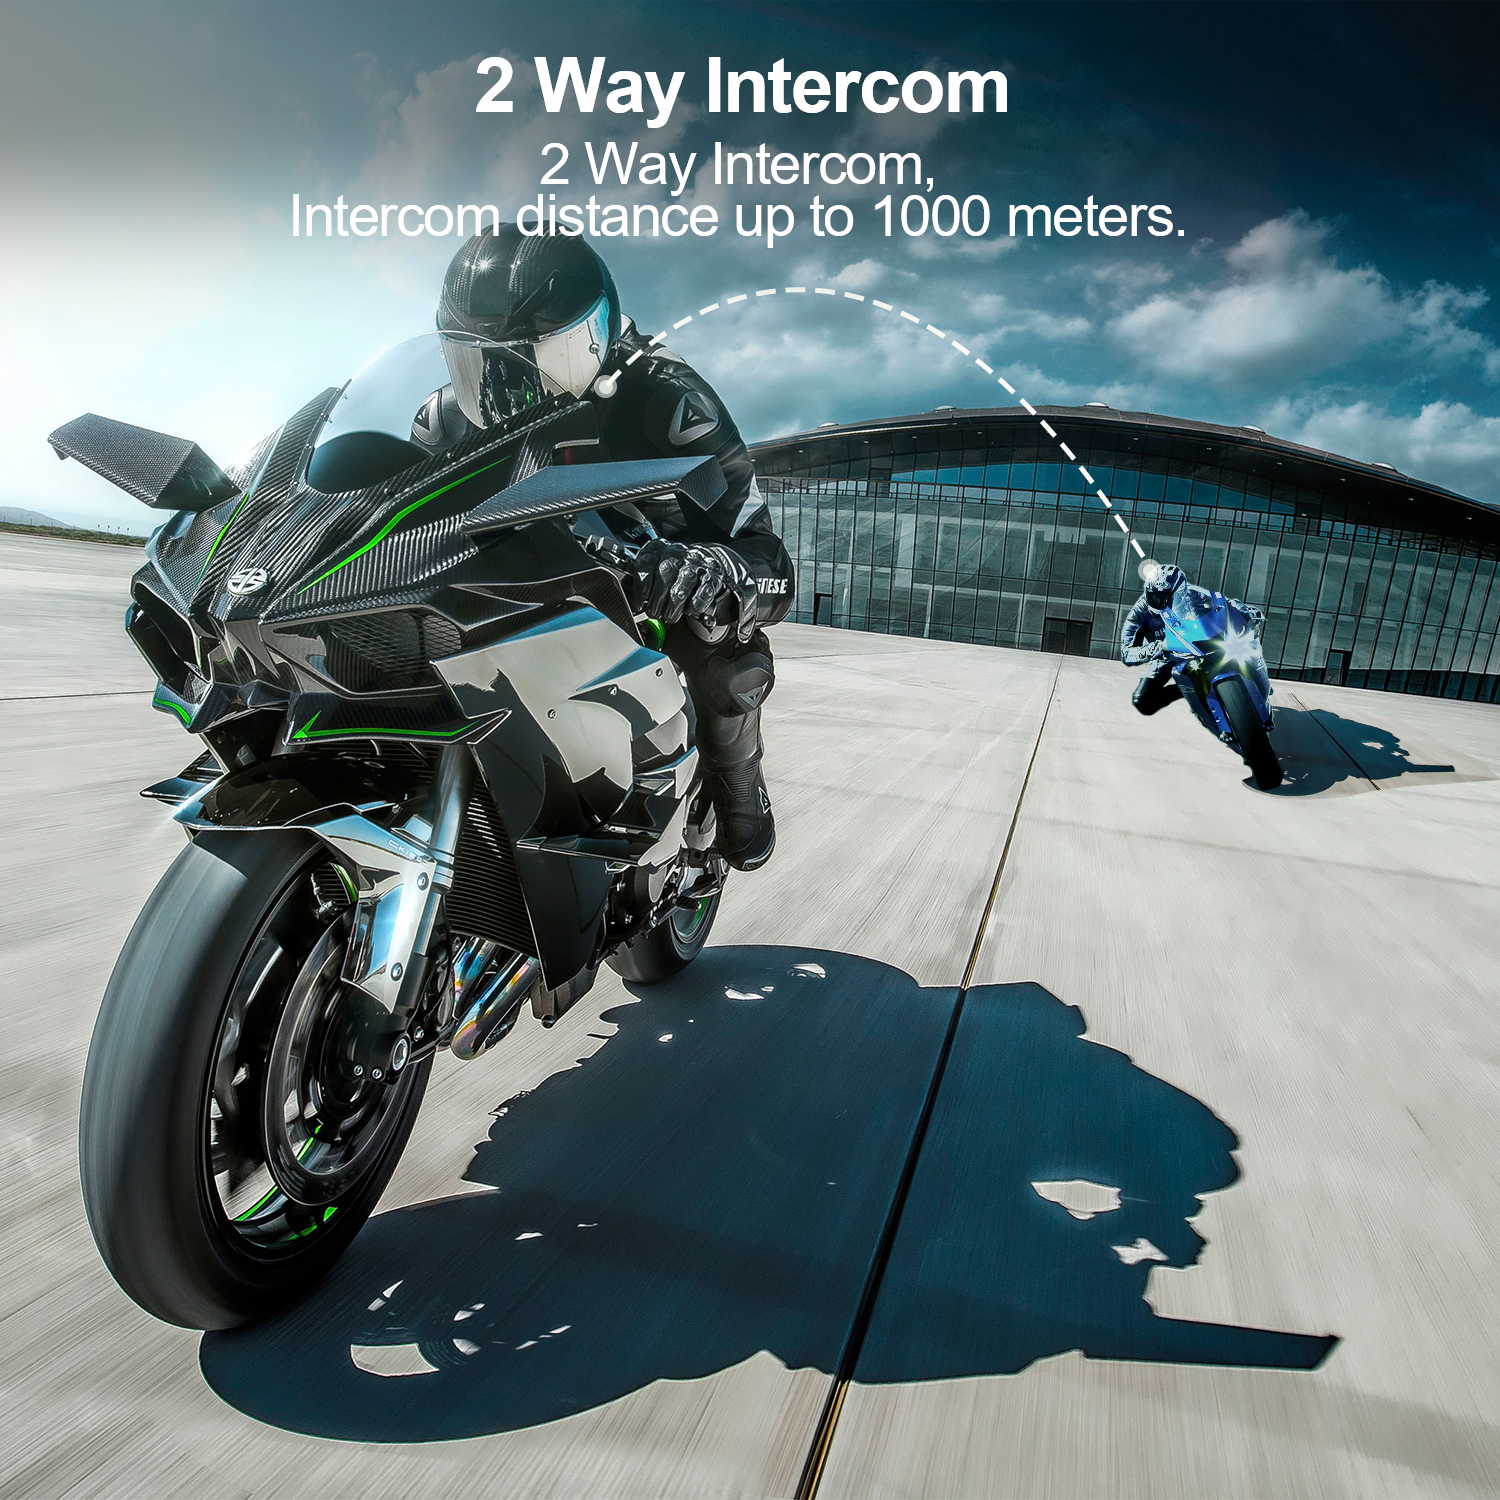 1/2Pcs Bluetooth Intercom Motorcycle helmet bluetooth headset for 2 Rider  intercomunicador Moto Interphone Headset Wireless